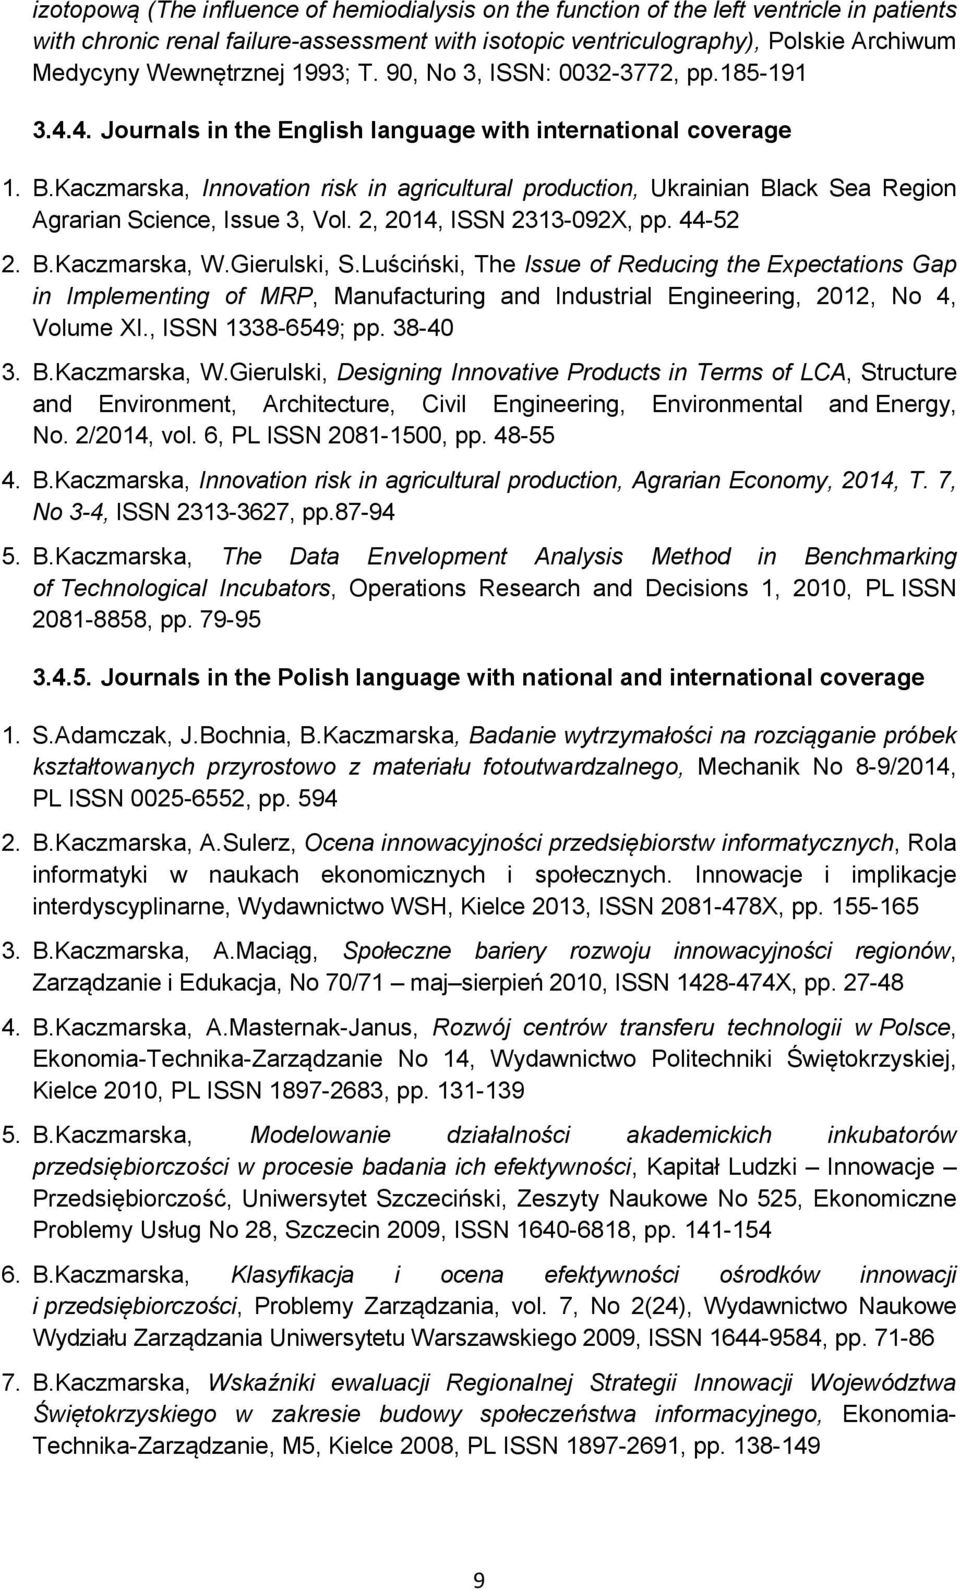 Kaczmarska, Innovation risk in agricultural production, Ukrainian Black Sea Region Agrarian Science, Issue 3, Vol. 2, 2014, ISSN 2313-092X, pp. 44-52 2. B.Kaczmarska, W.Gierulski, S.